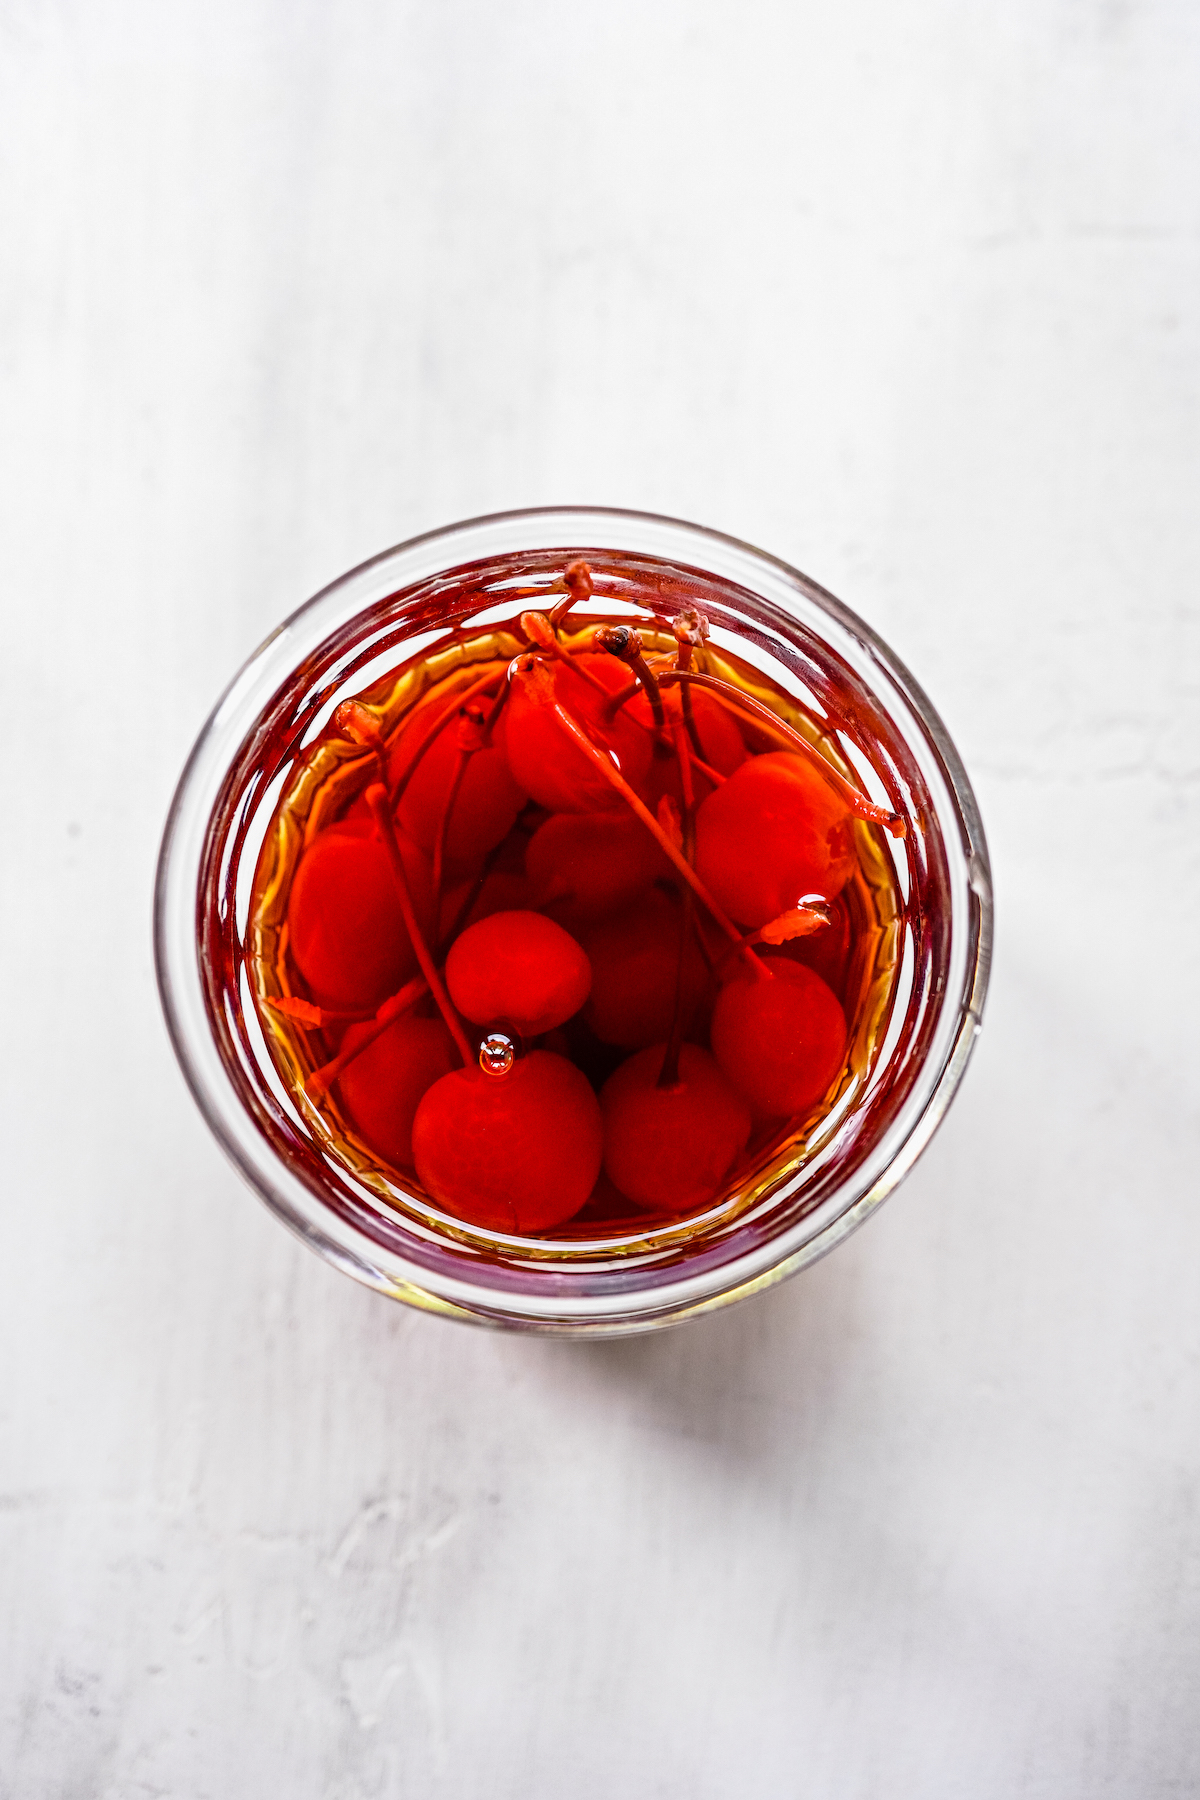 Overhead shot of a jar full of maraschino cherries, covered in liqueur.